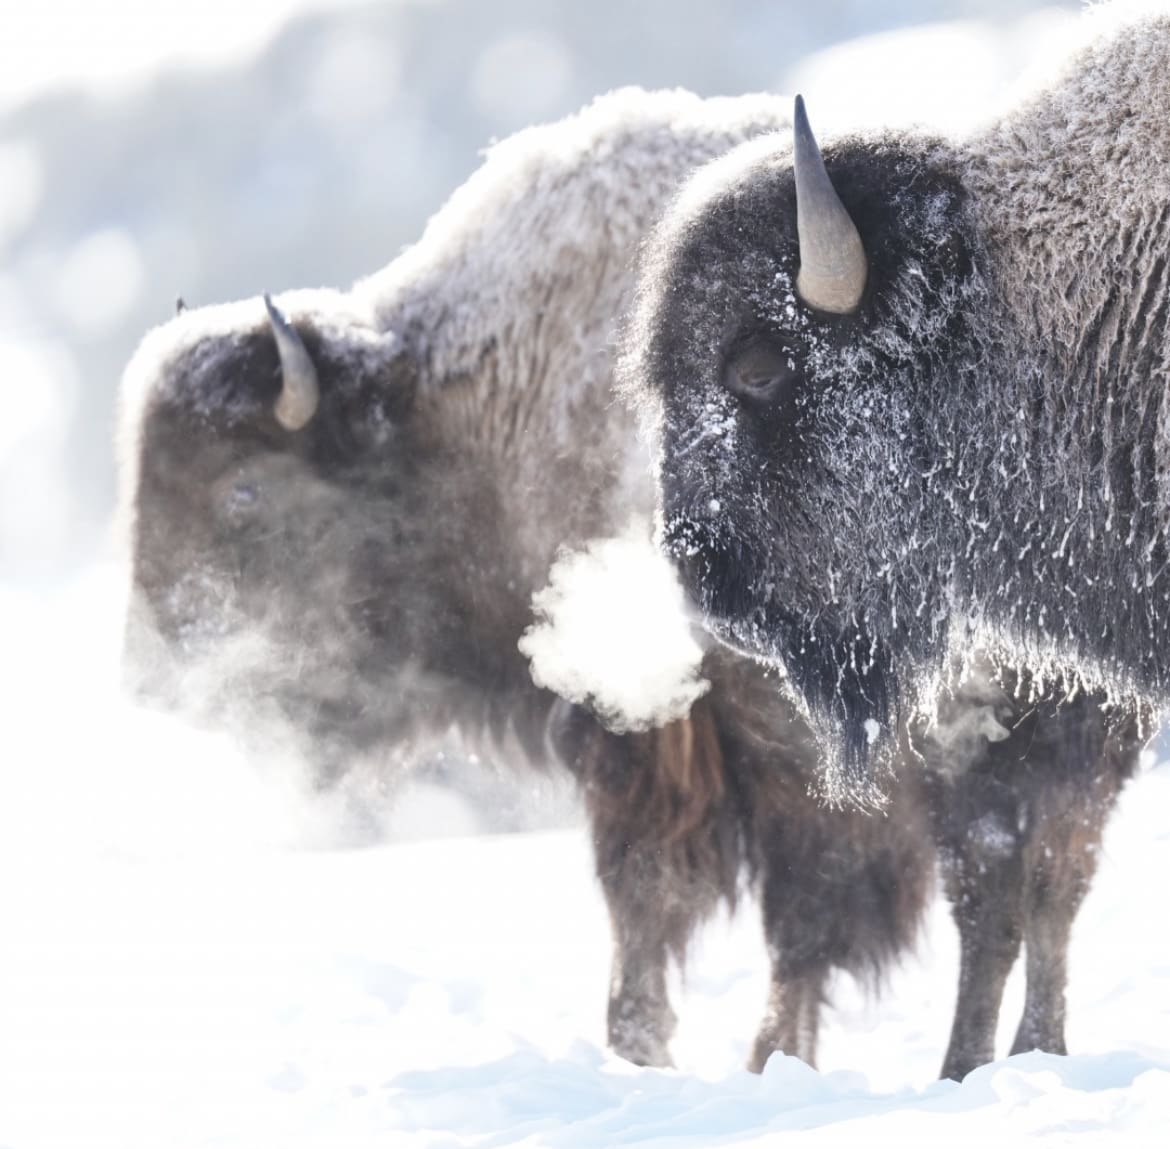 Buffalo in the snow